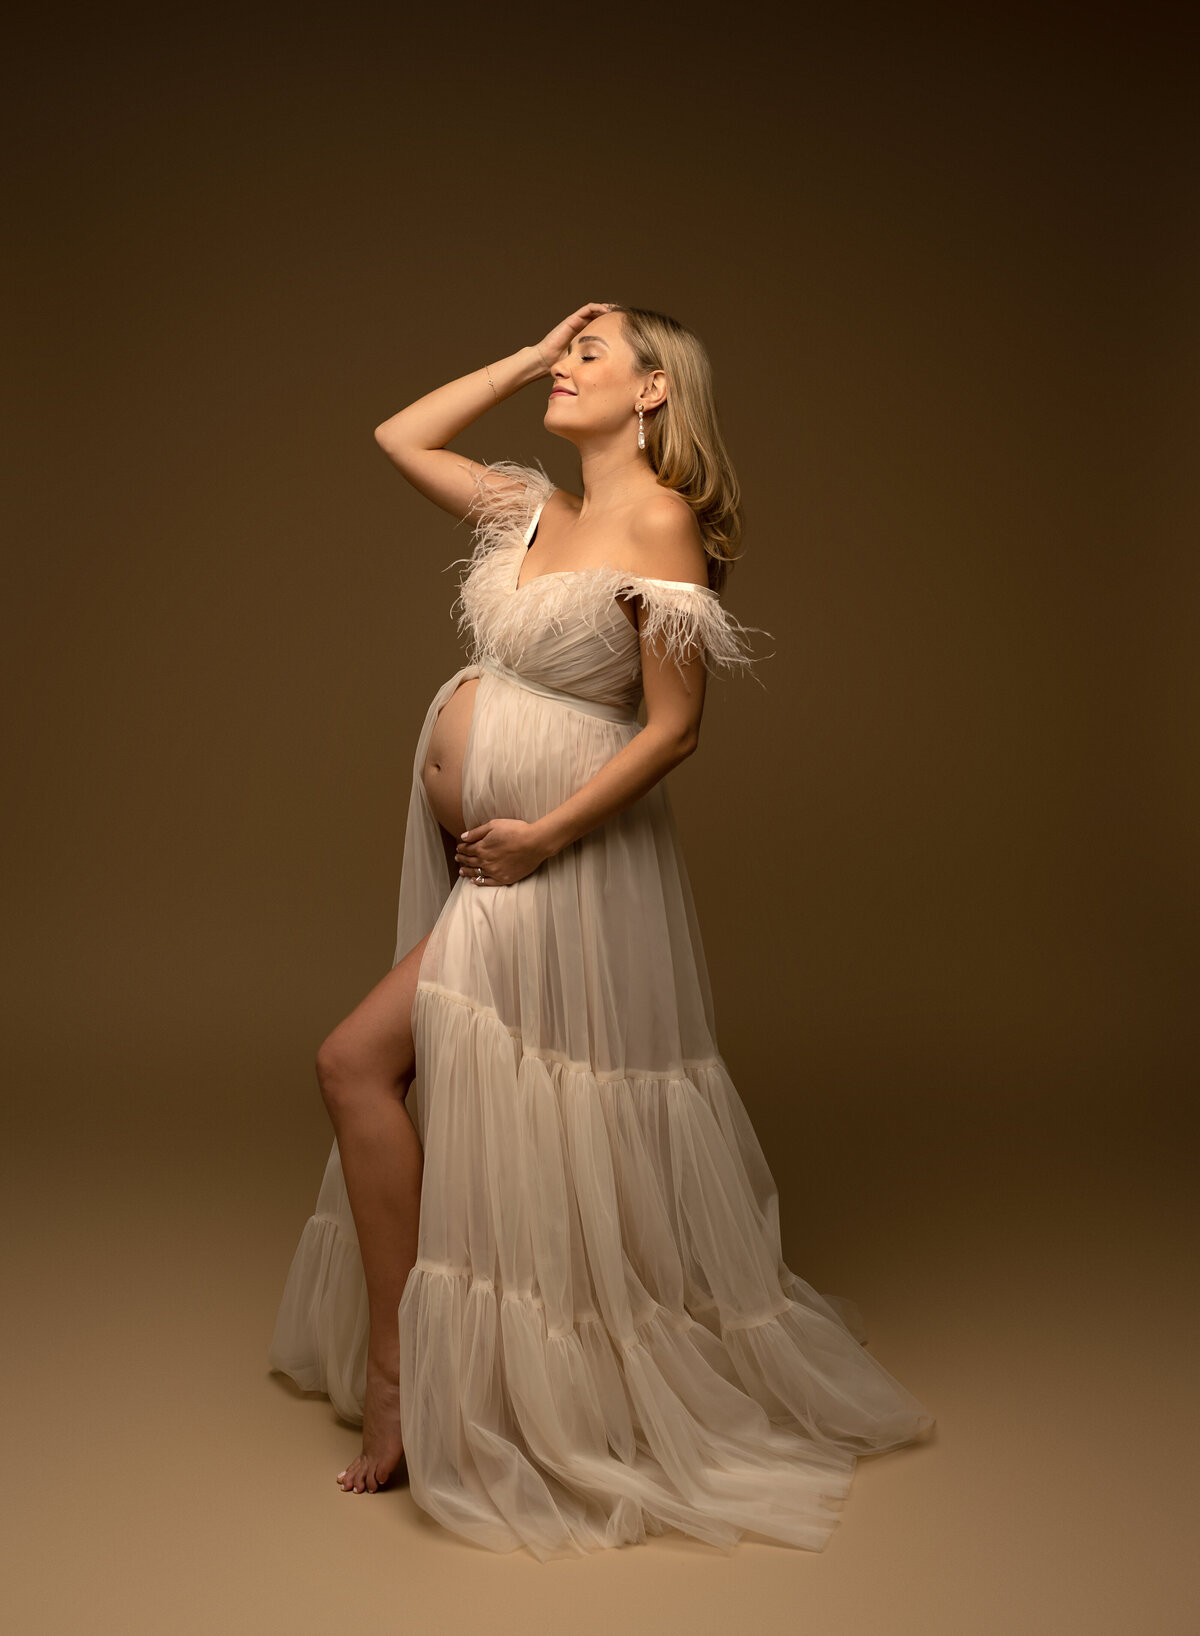 austin-maternity-photographer-hello-photography-6